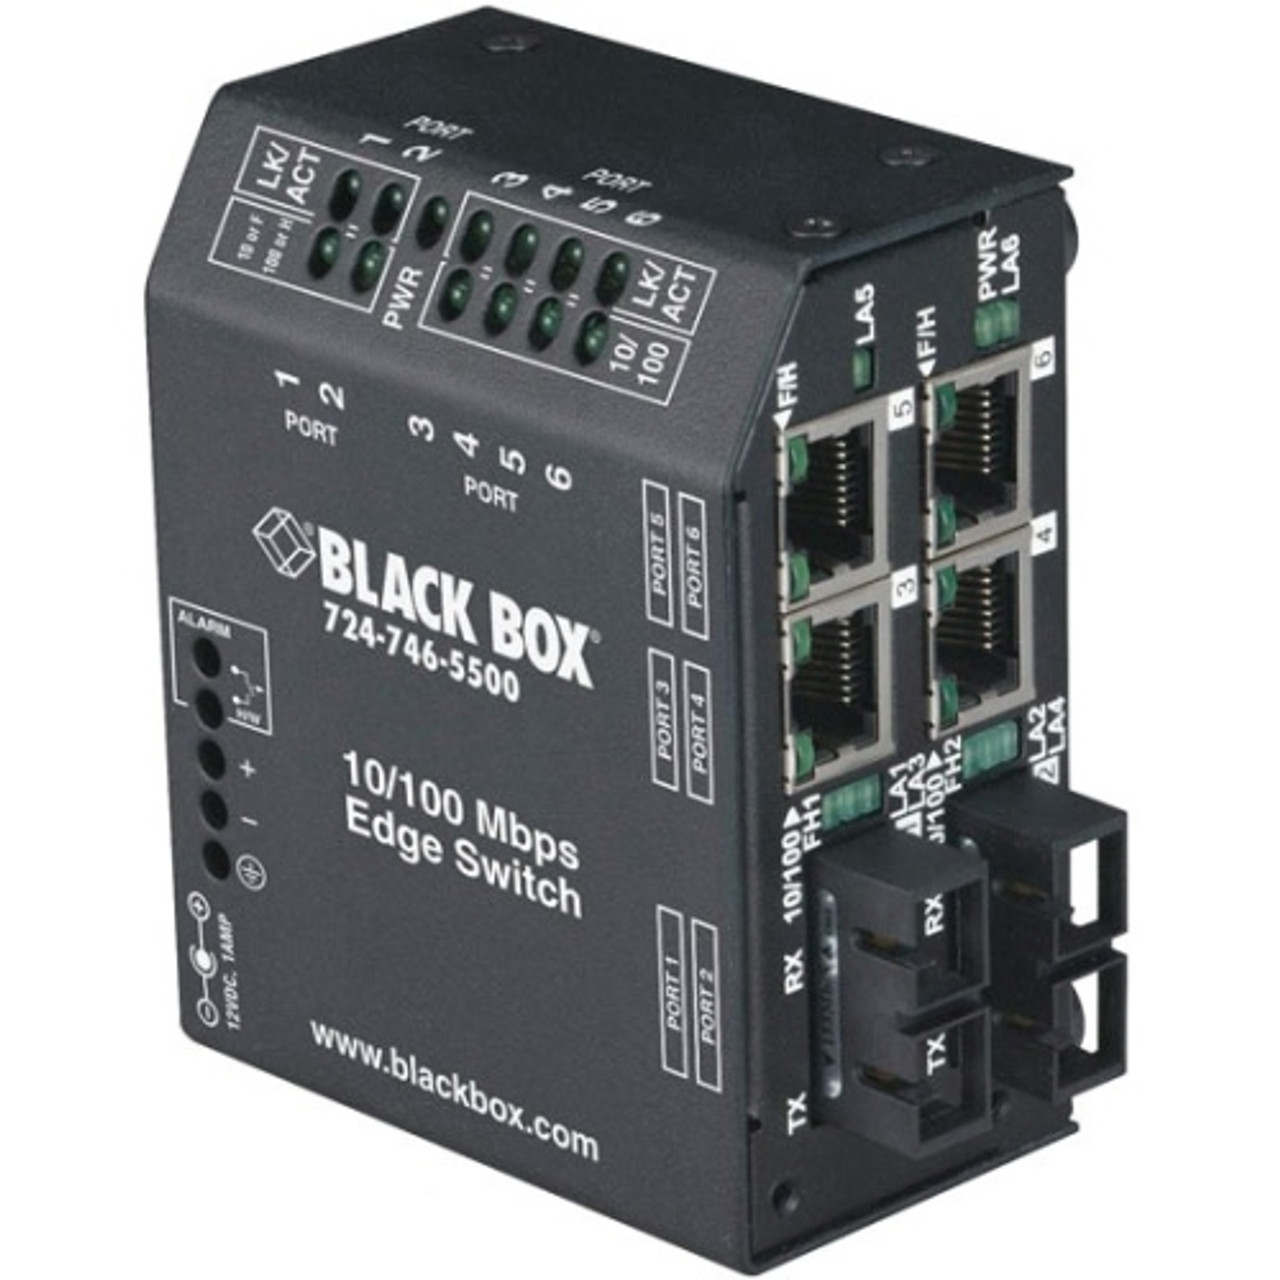 LBH240A-SSC Black Box NIB-Heavy-Duty Edge Switch Standard (4) Copper + (2) Fiber Si (Refurbished)